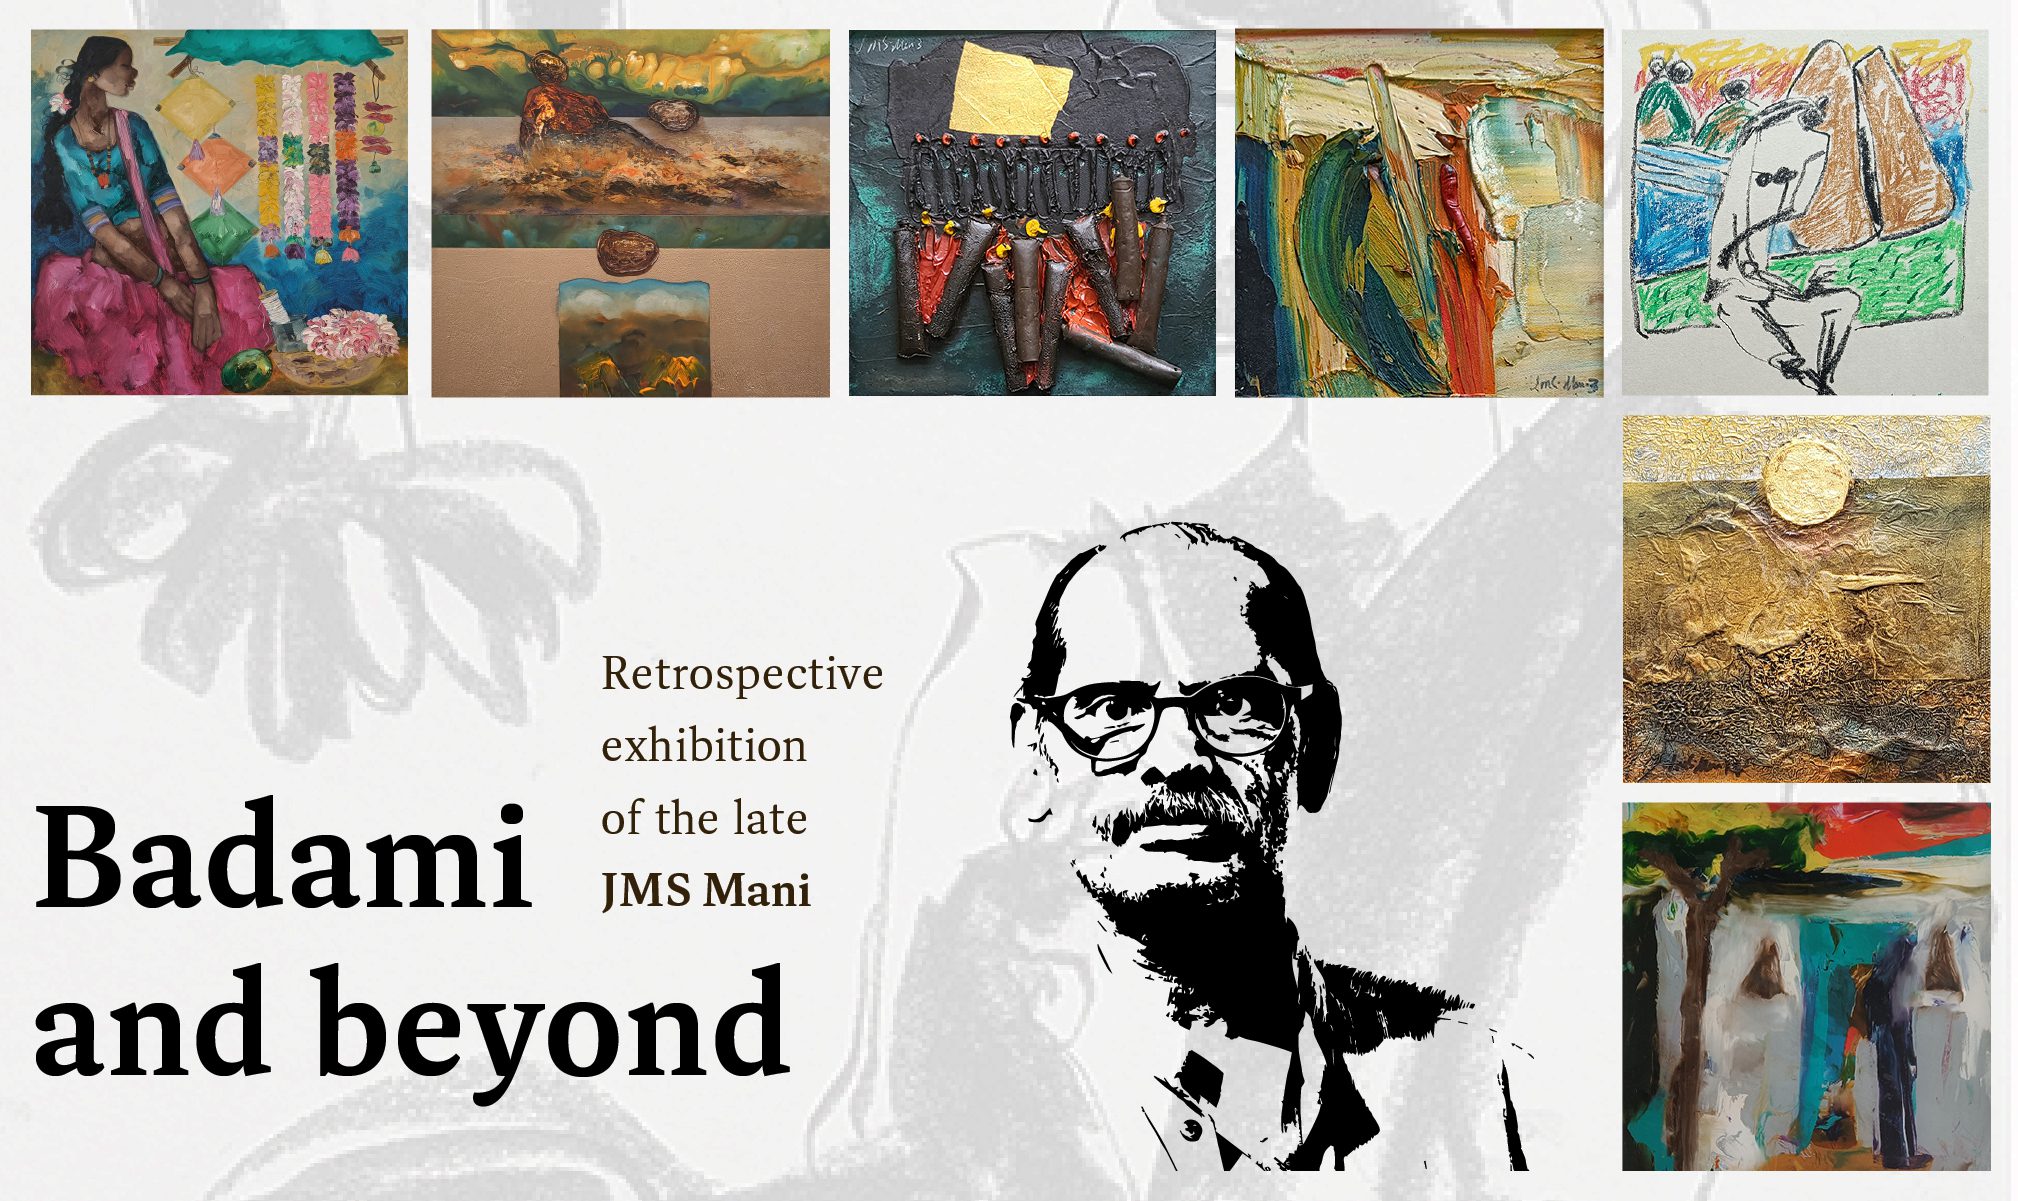 Kynkyny Art Gallery Bangalore Exhibition